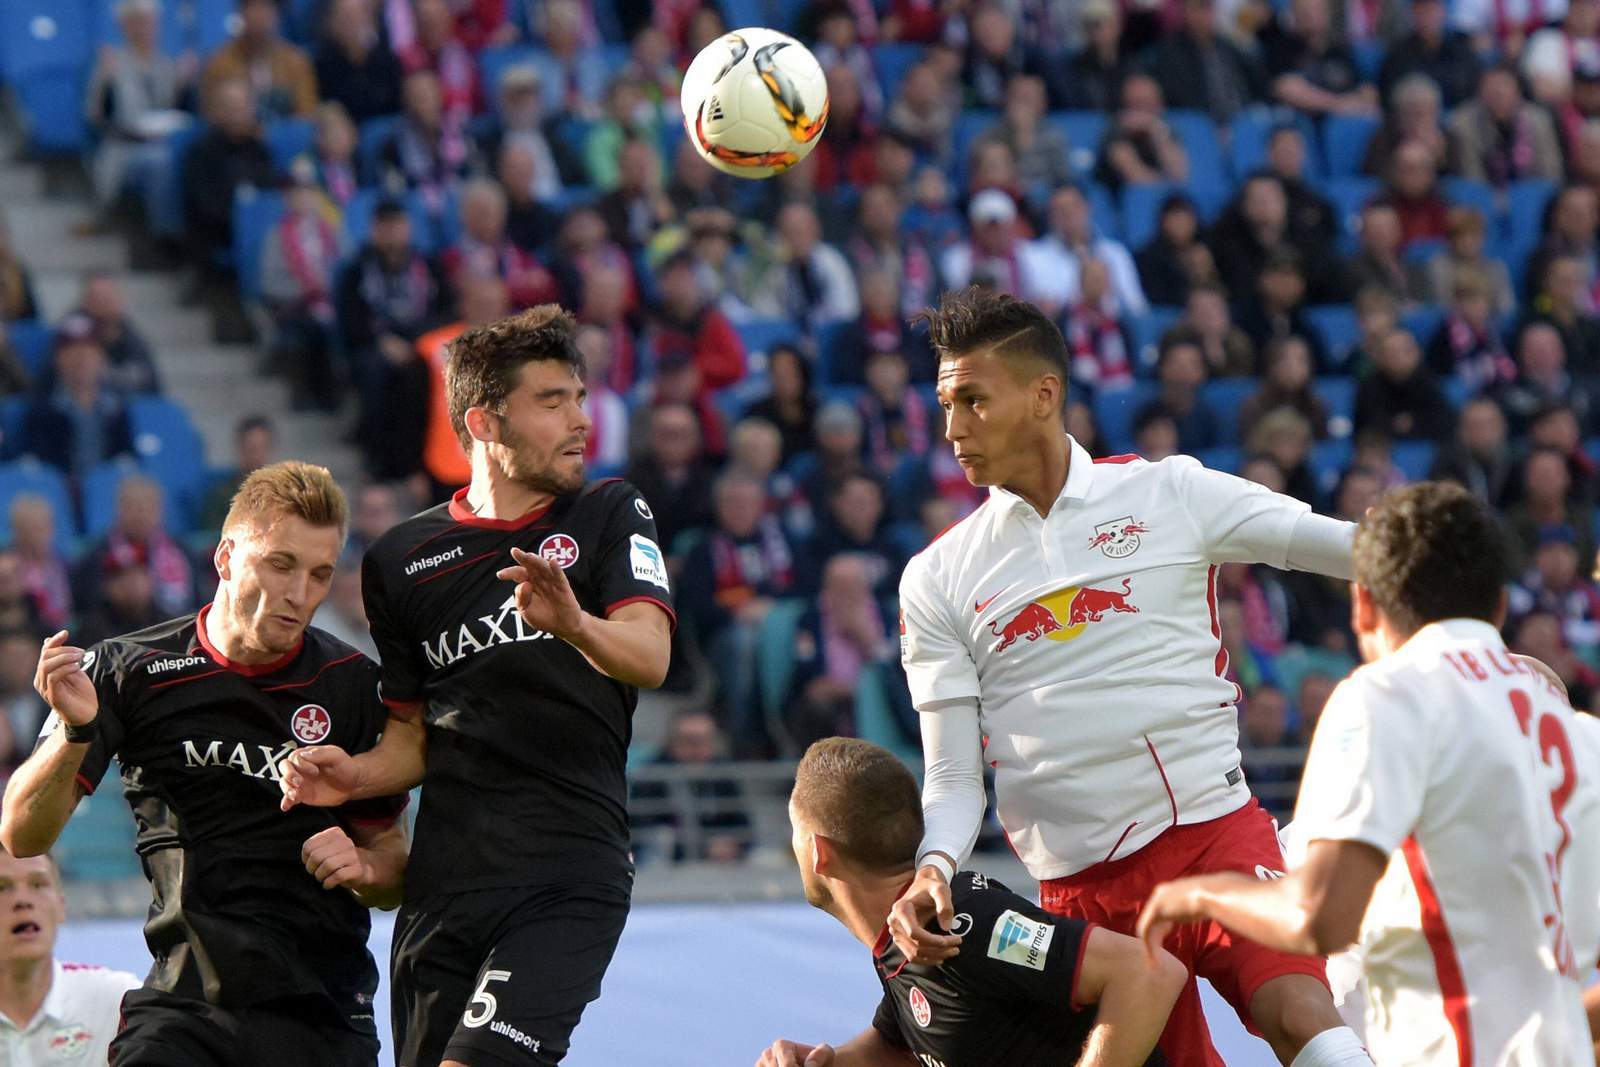 Setzt sich Mockenhaupt gegen Selke durch? Unser Tipp: Red Bull Leipzig gewinnt gegen FCK